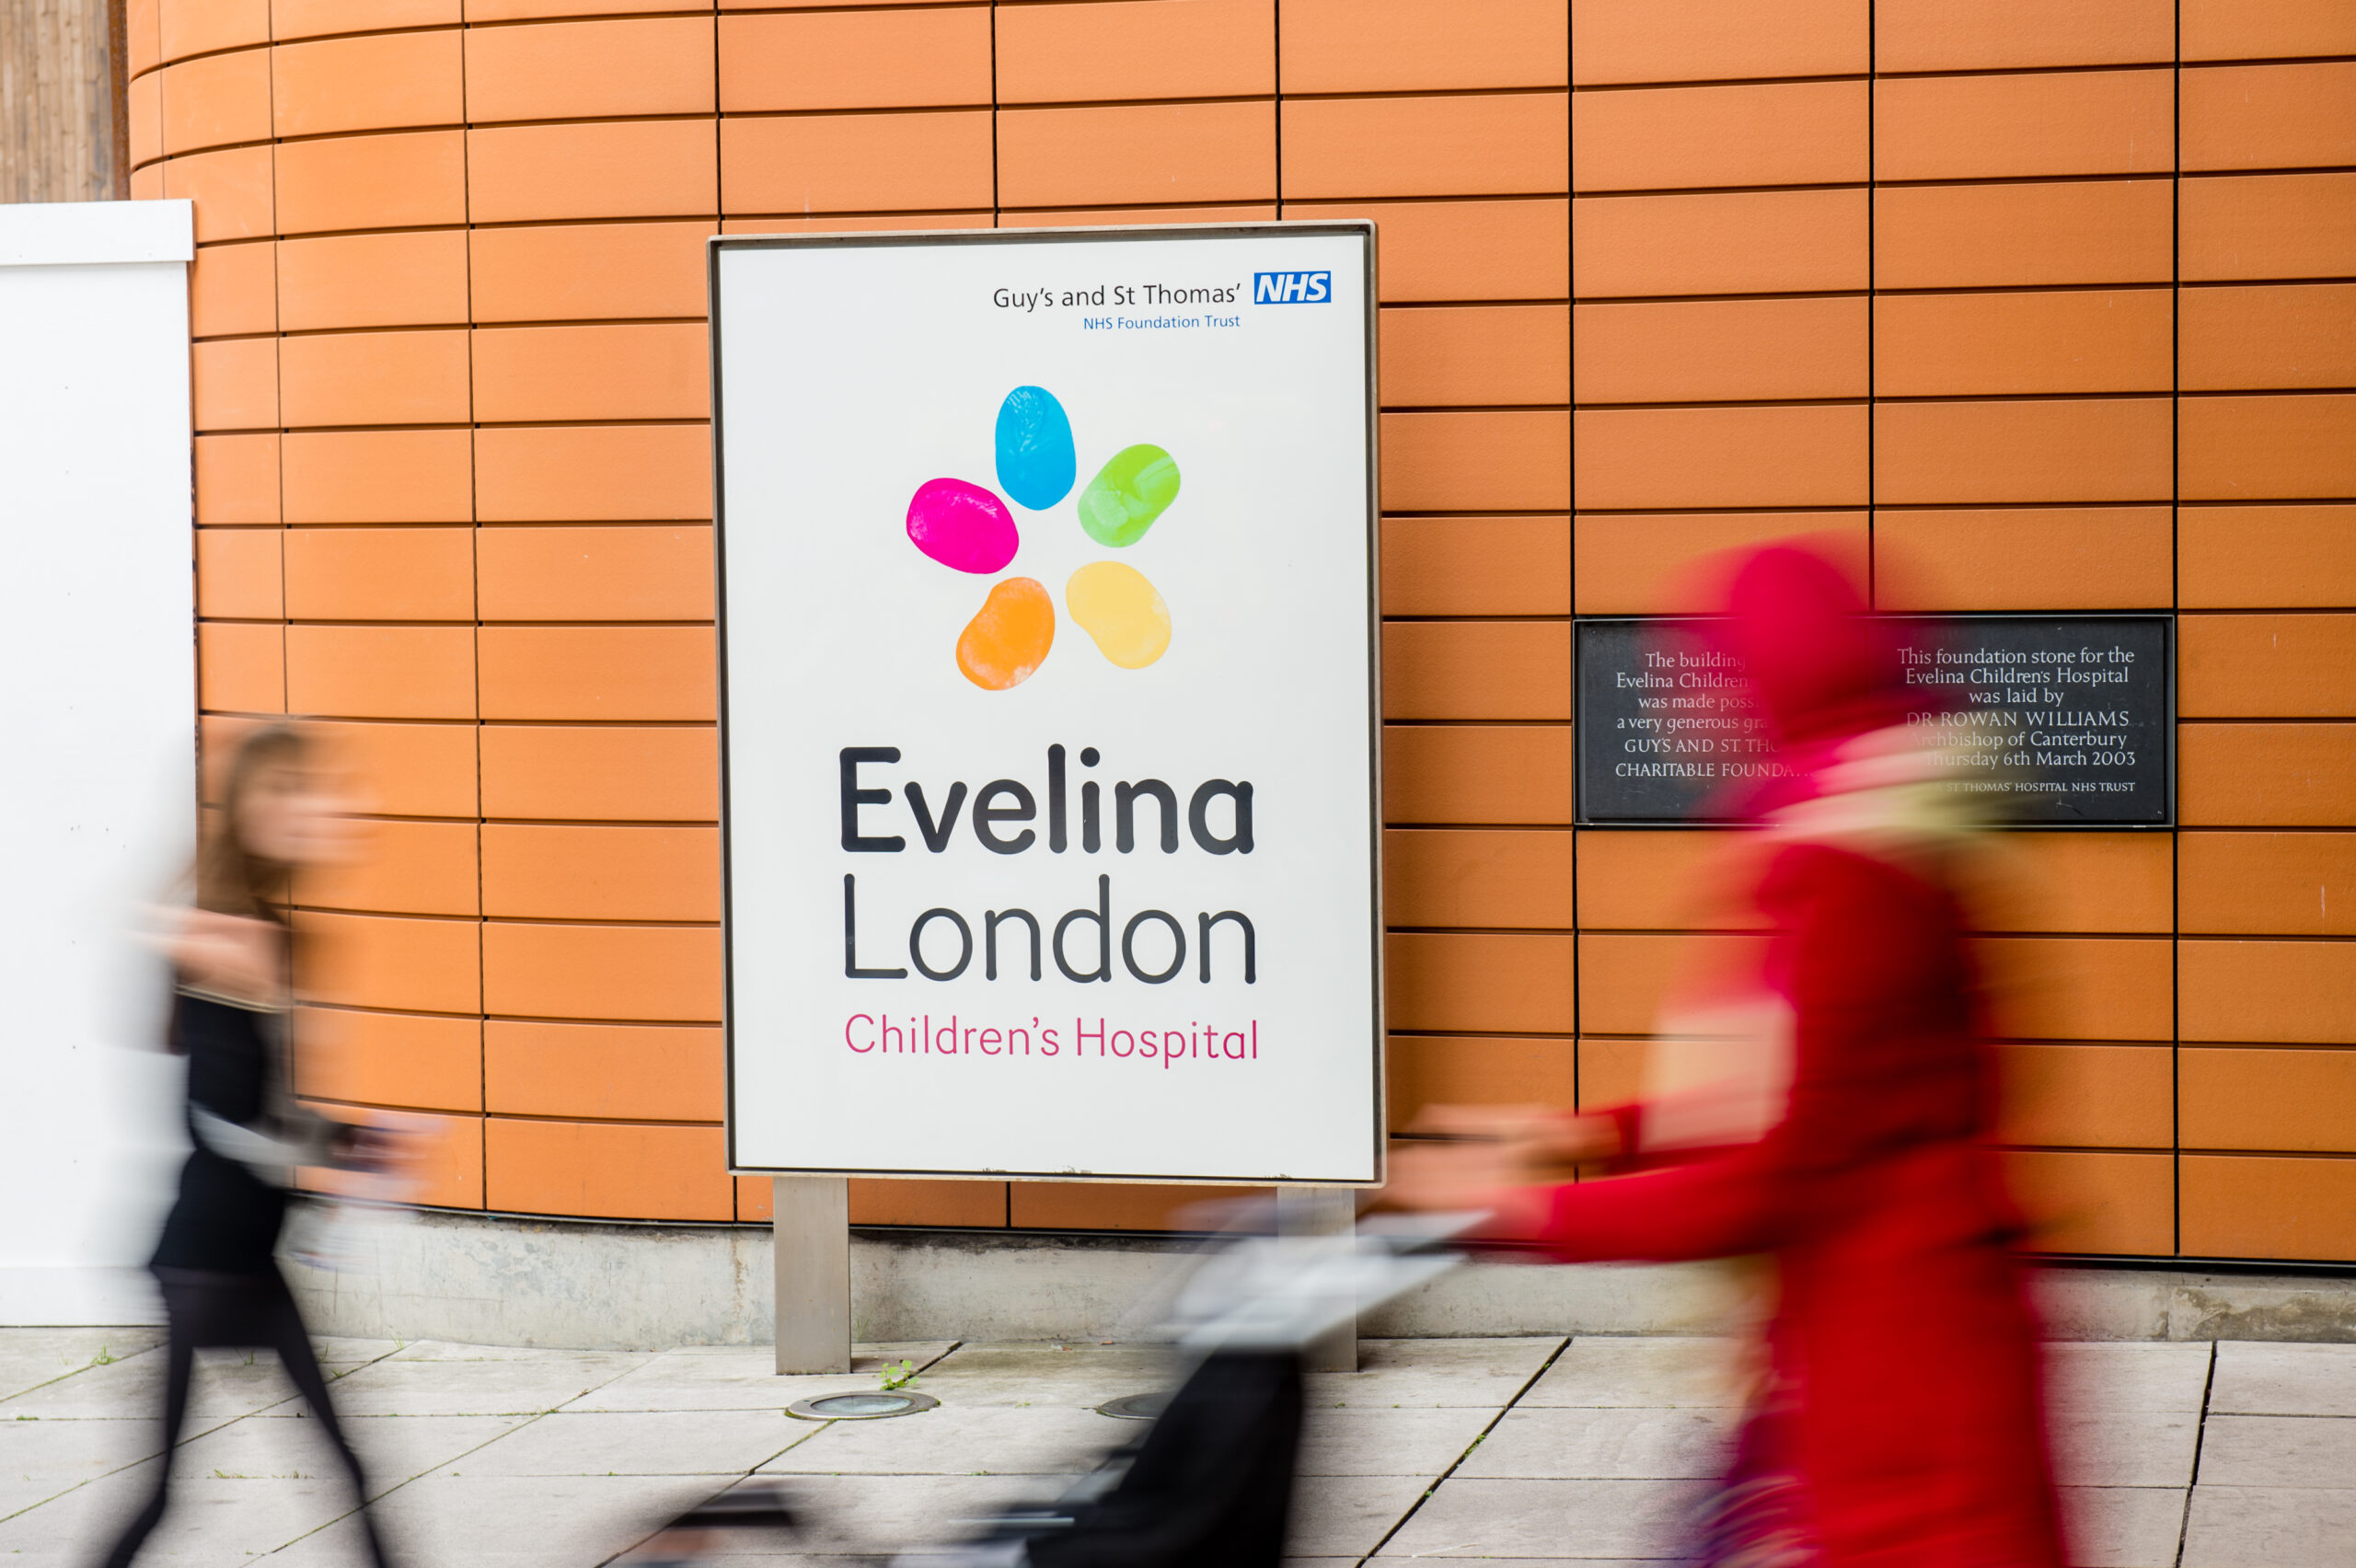 Evelina London Children's Hospital signage outside the hospital building